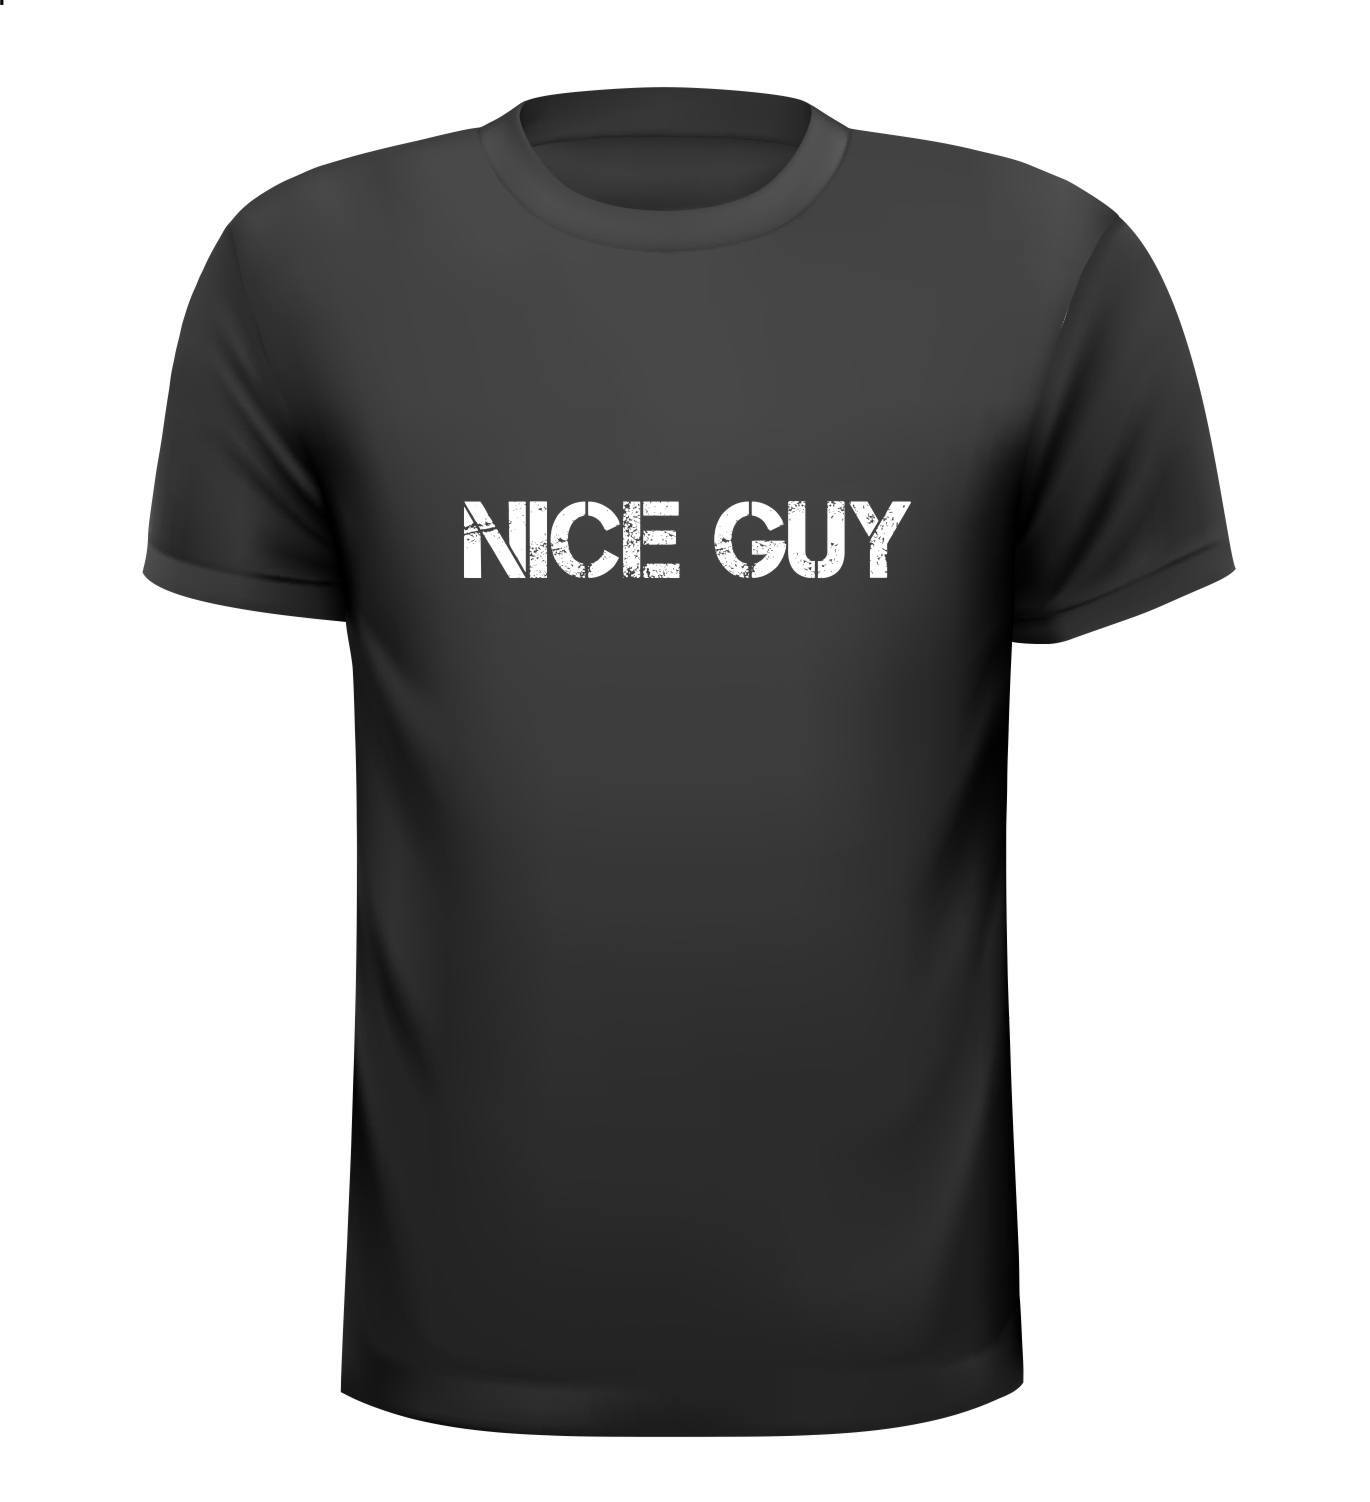 Nice guy T-shirt